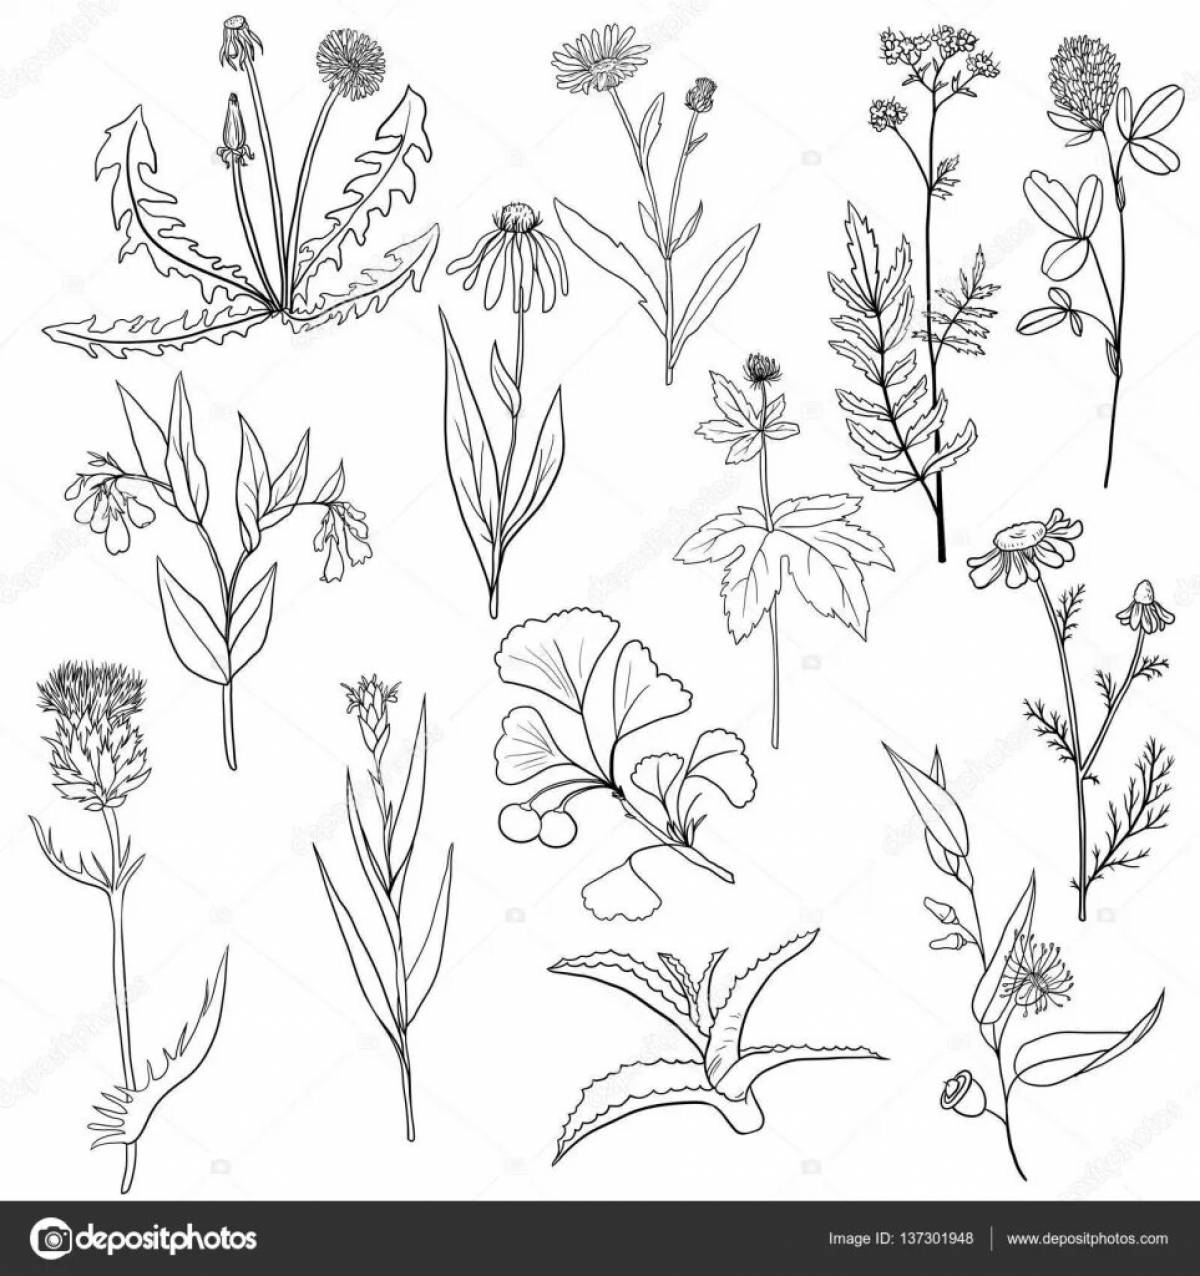 Informative coloring book medicinal plants for preschoolers